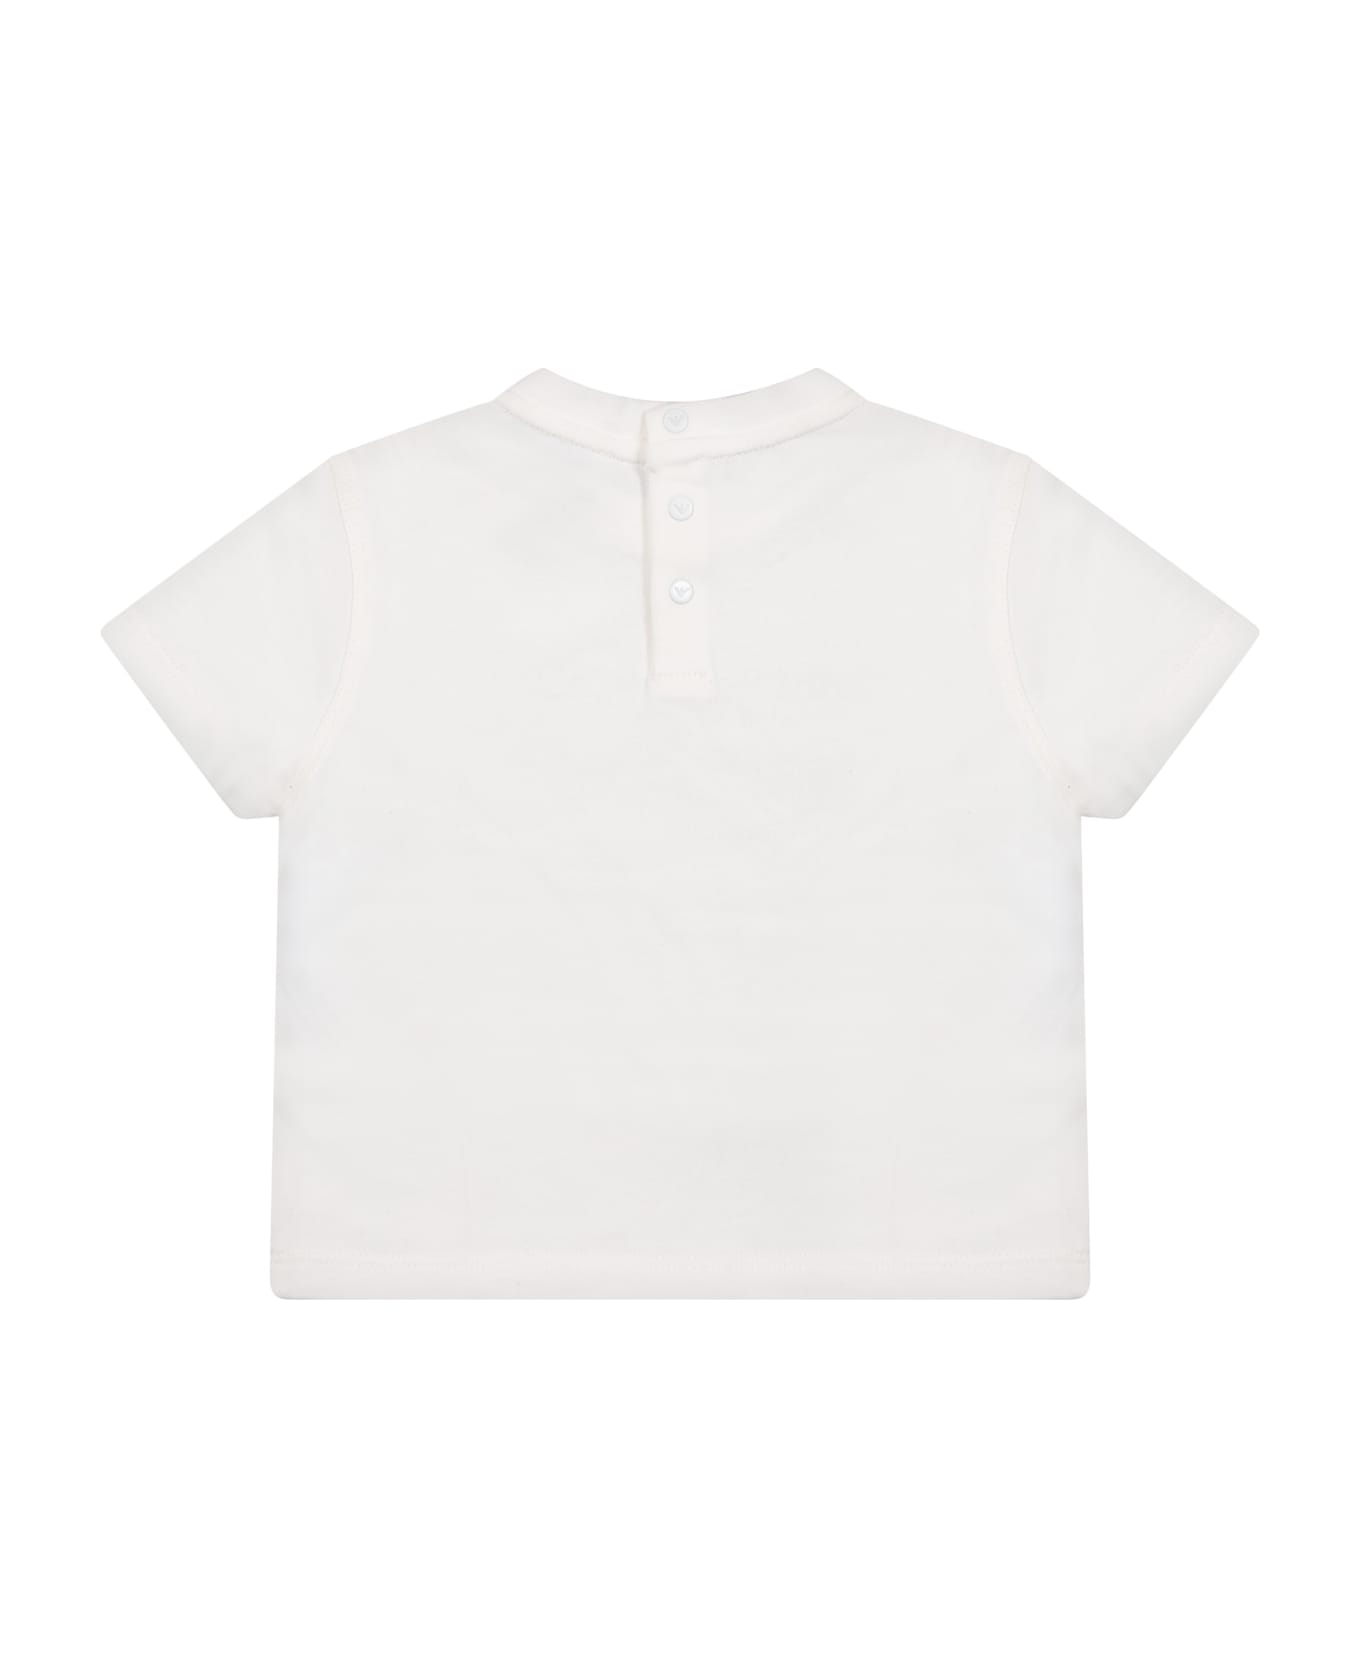 Armani Collezioni White T-shirt For Boaby Boy With Originals Eaglet - White